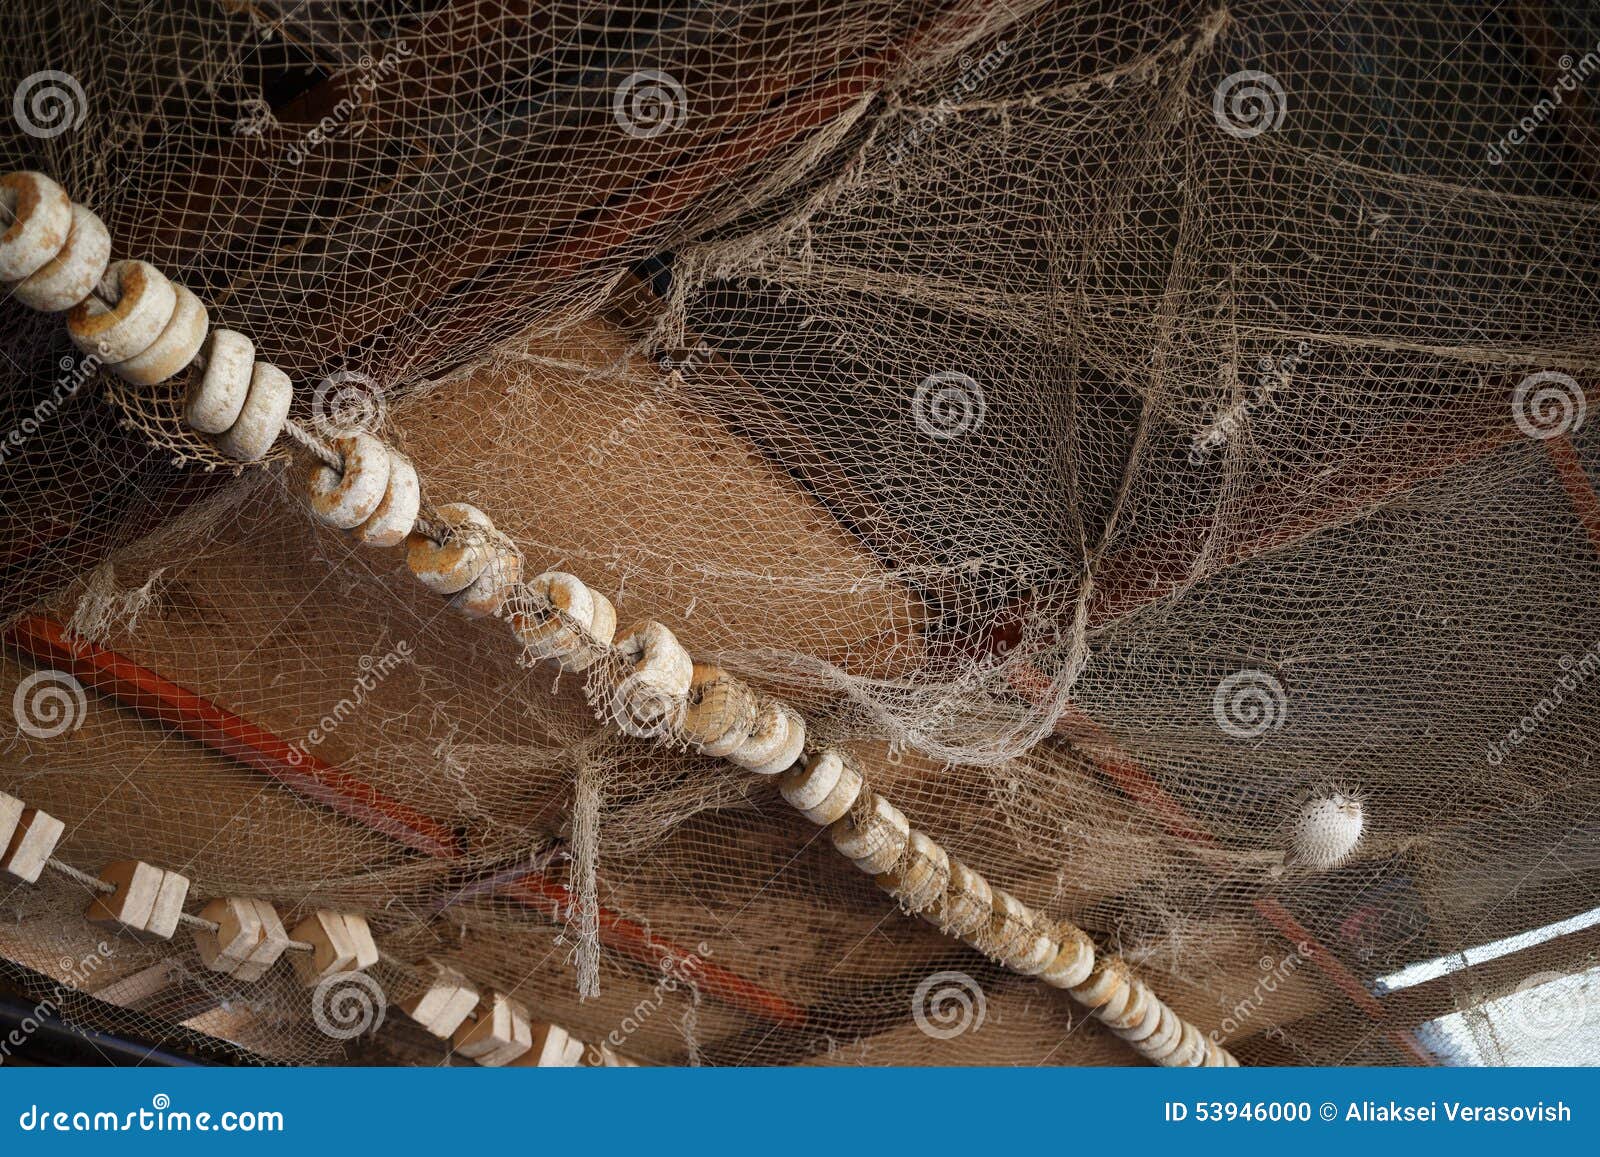 Old fishing net stock photo. Image of hobby, hanging - 53946000